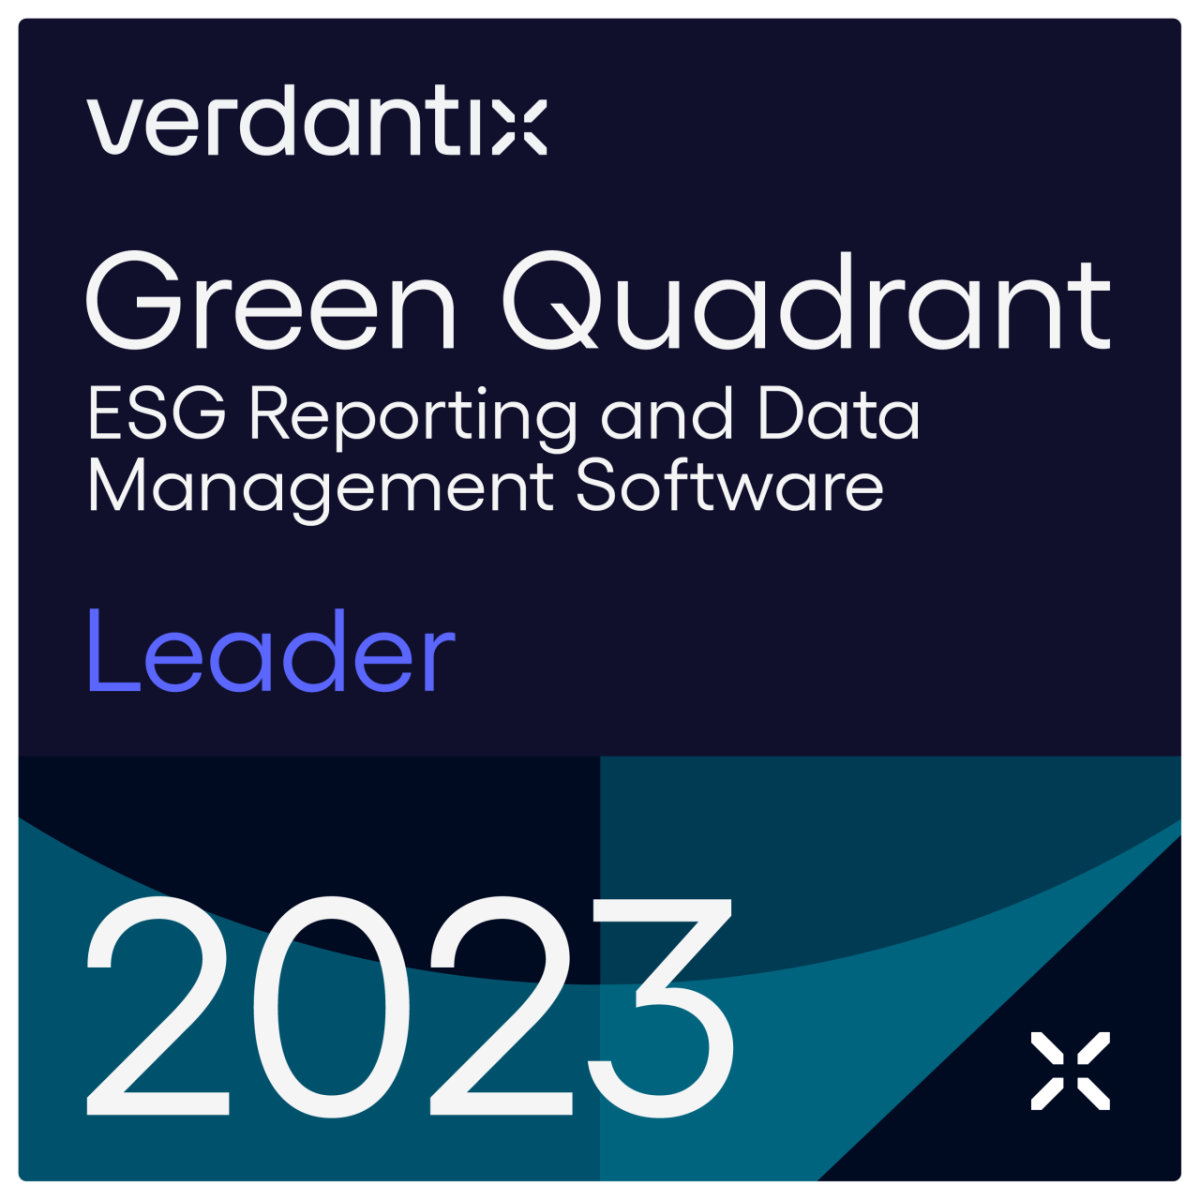 Verdantix Green Quadrant Leader badge